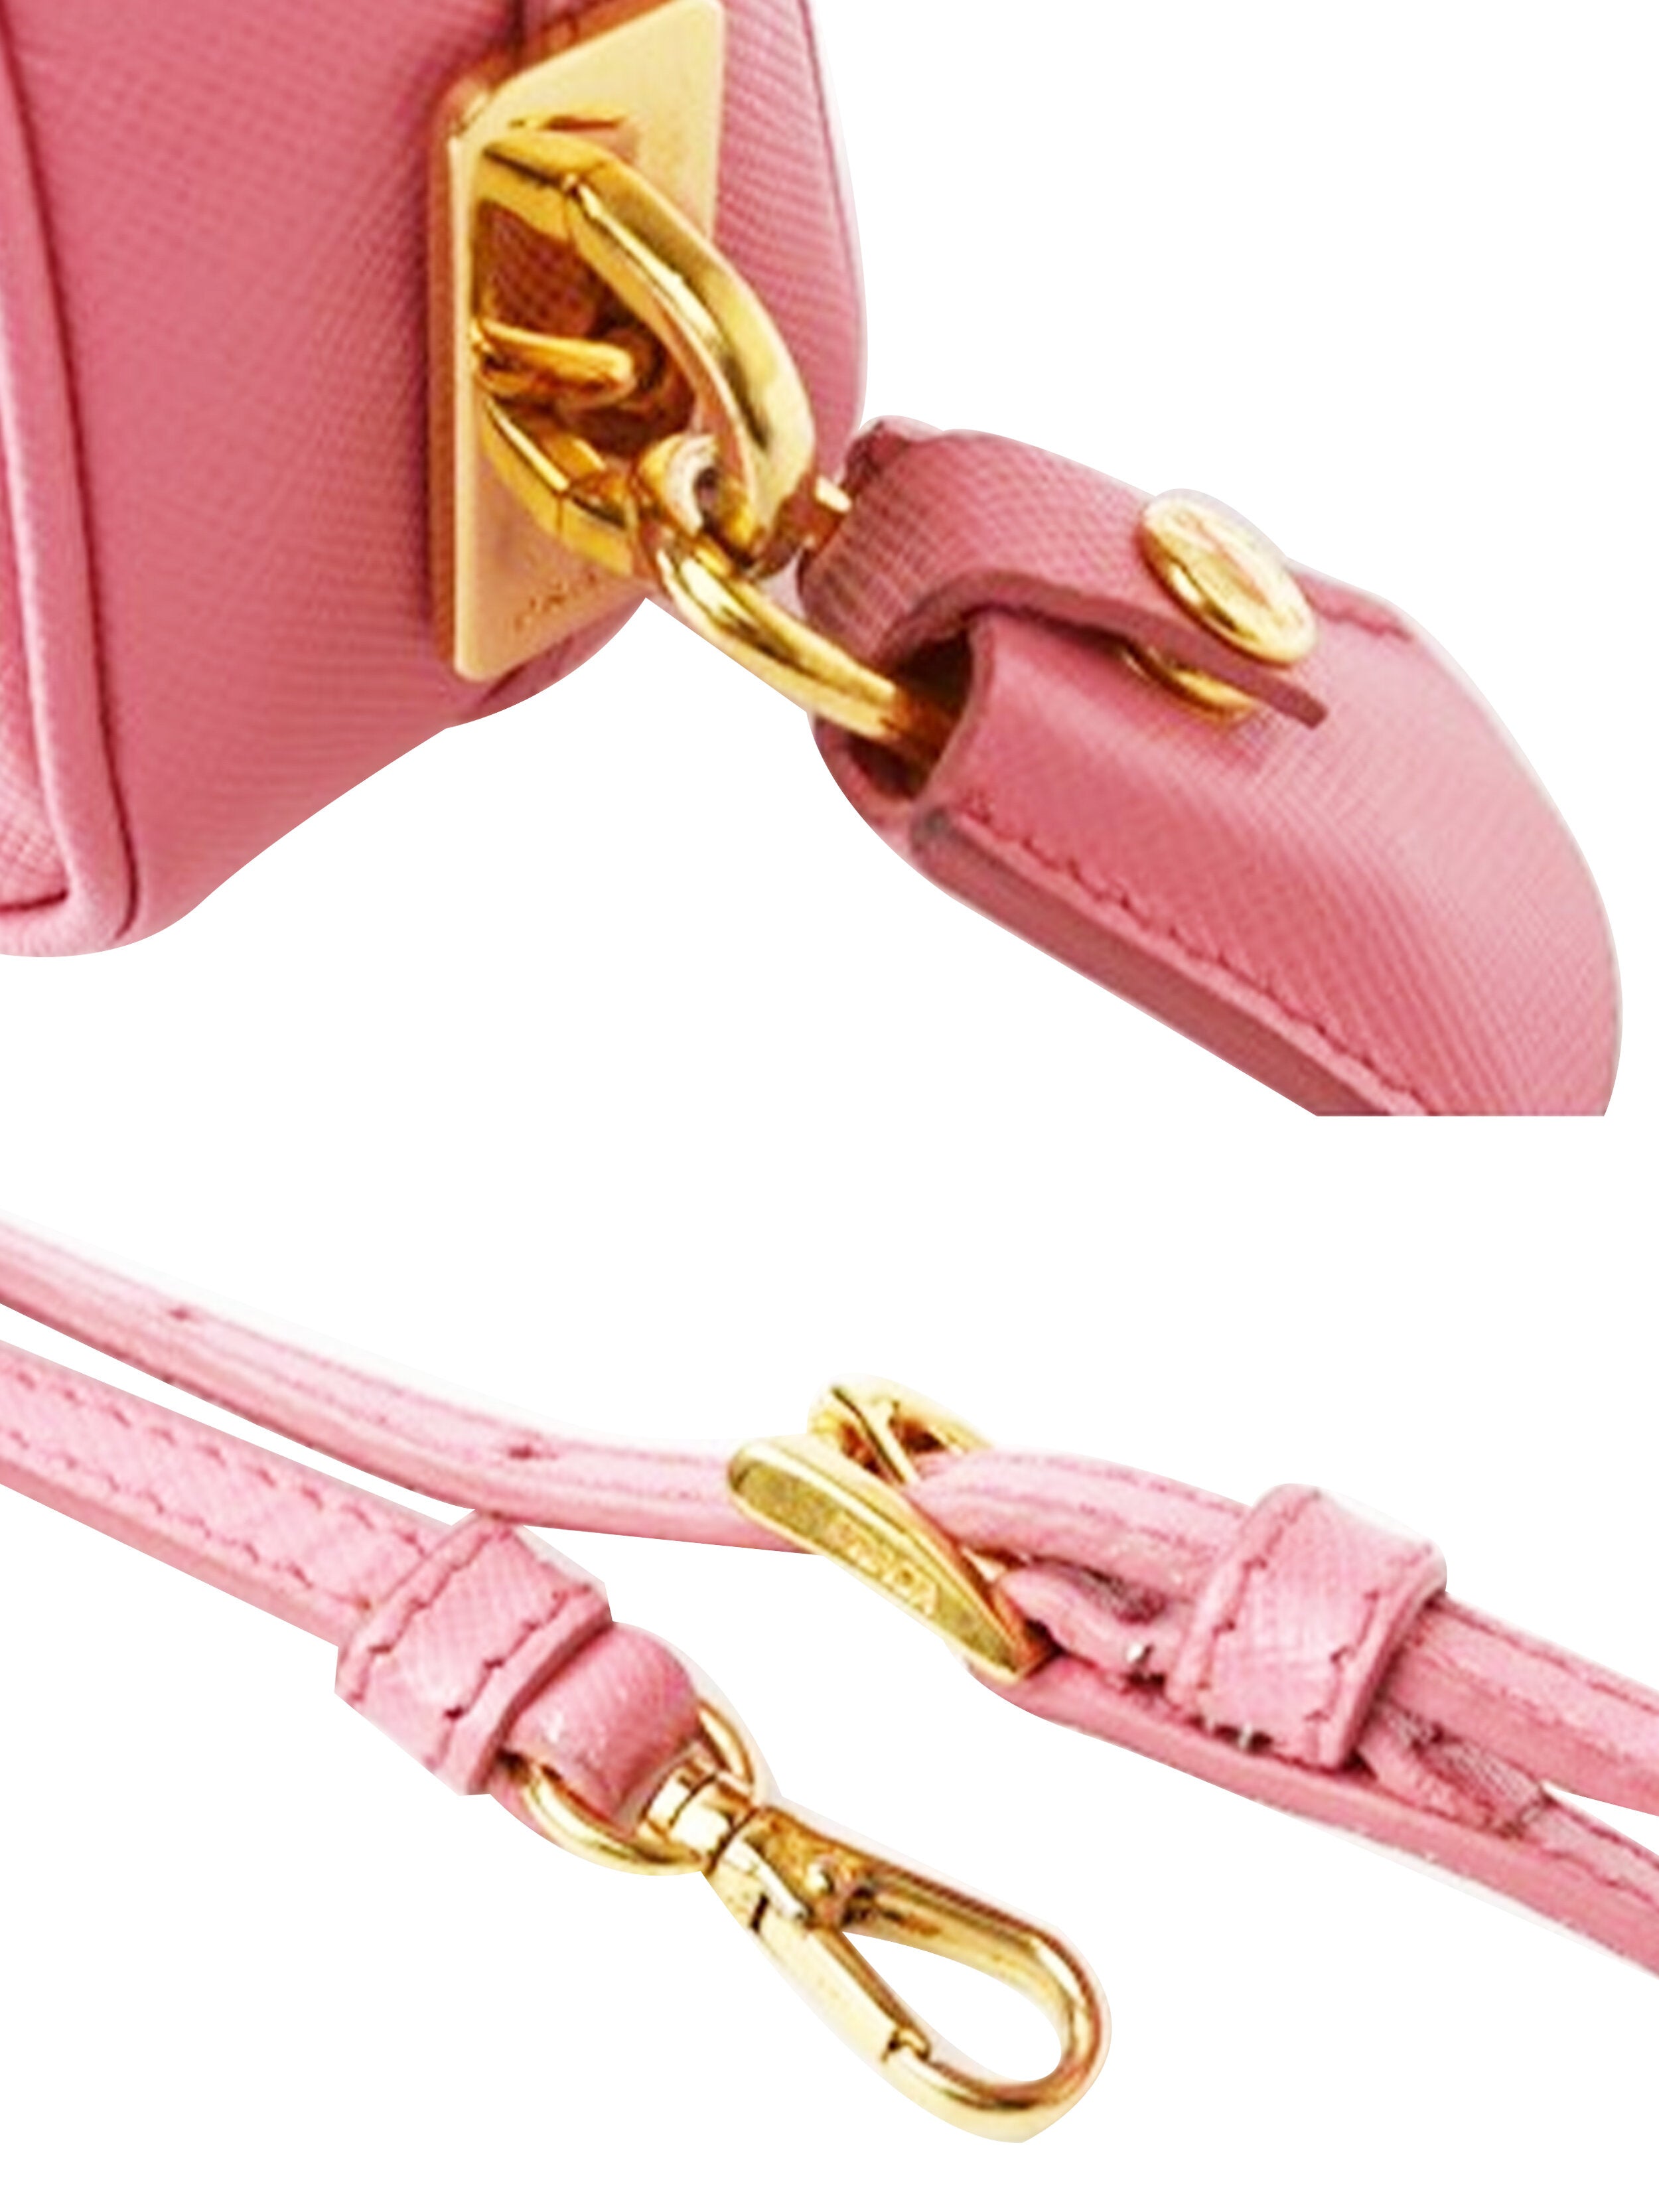 Prada 2010s Saffiano Small Pink Leather Shoulder Bag